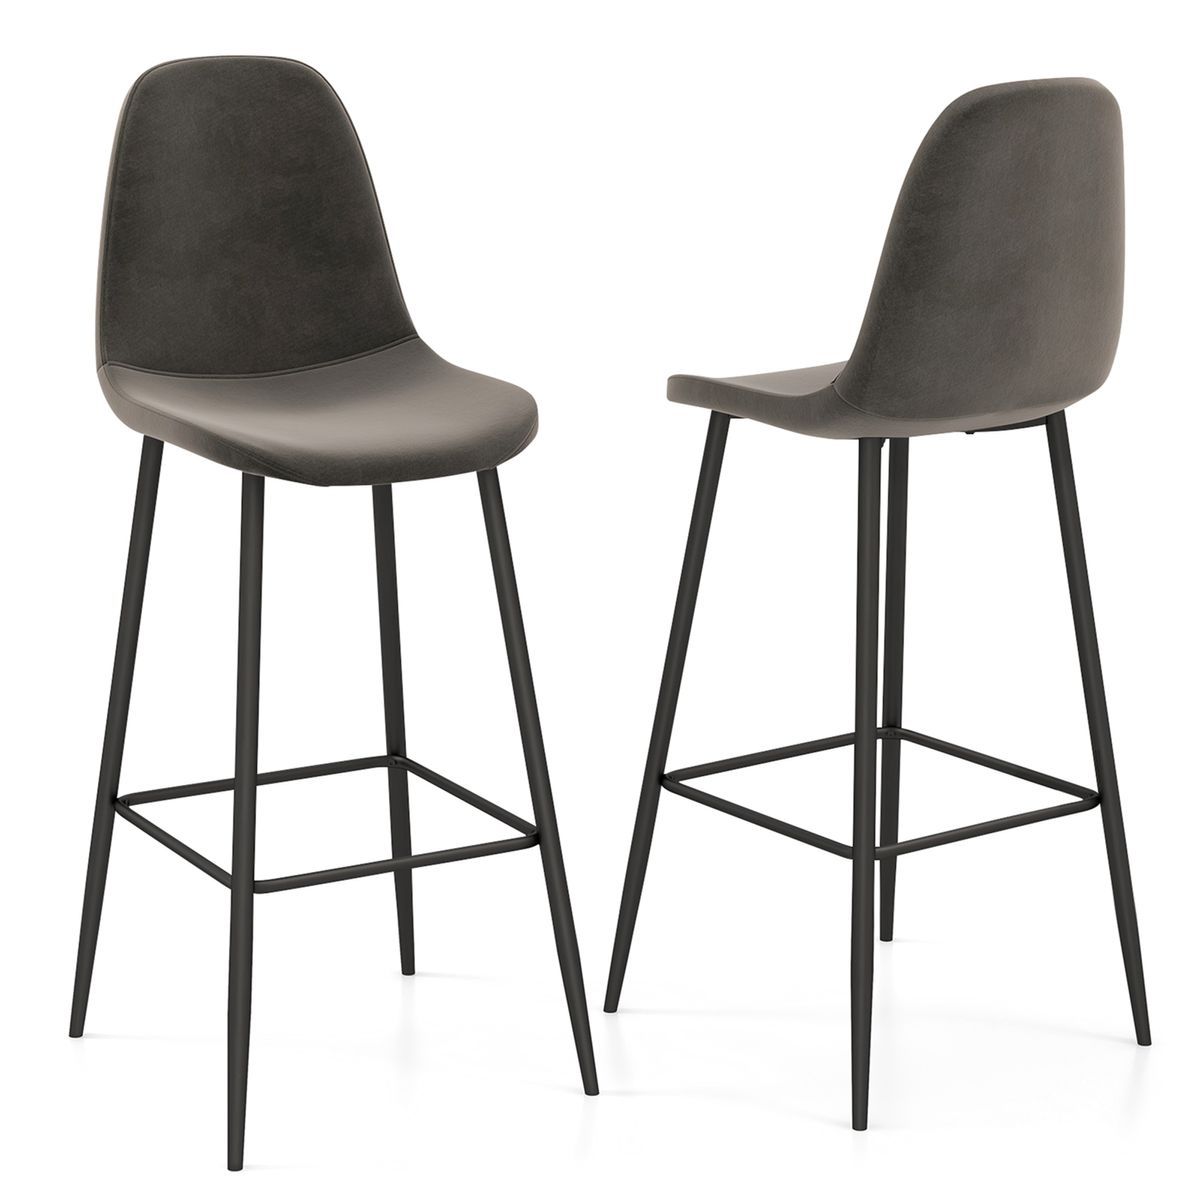 Photos - Chair Goplus 29.5-Inch High-Back Bar Stools  - 2 Bar Stools Grey JV109(Set of 2)